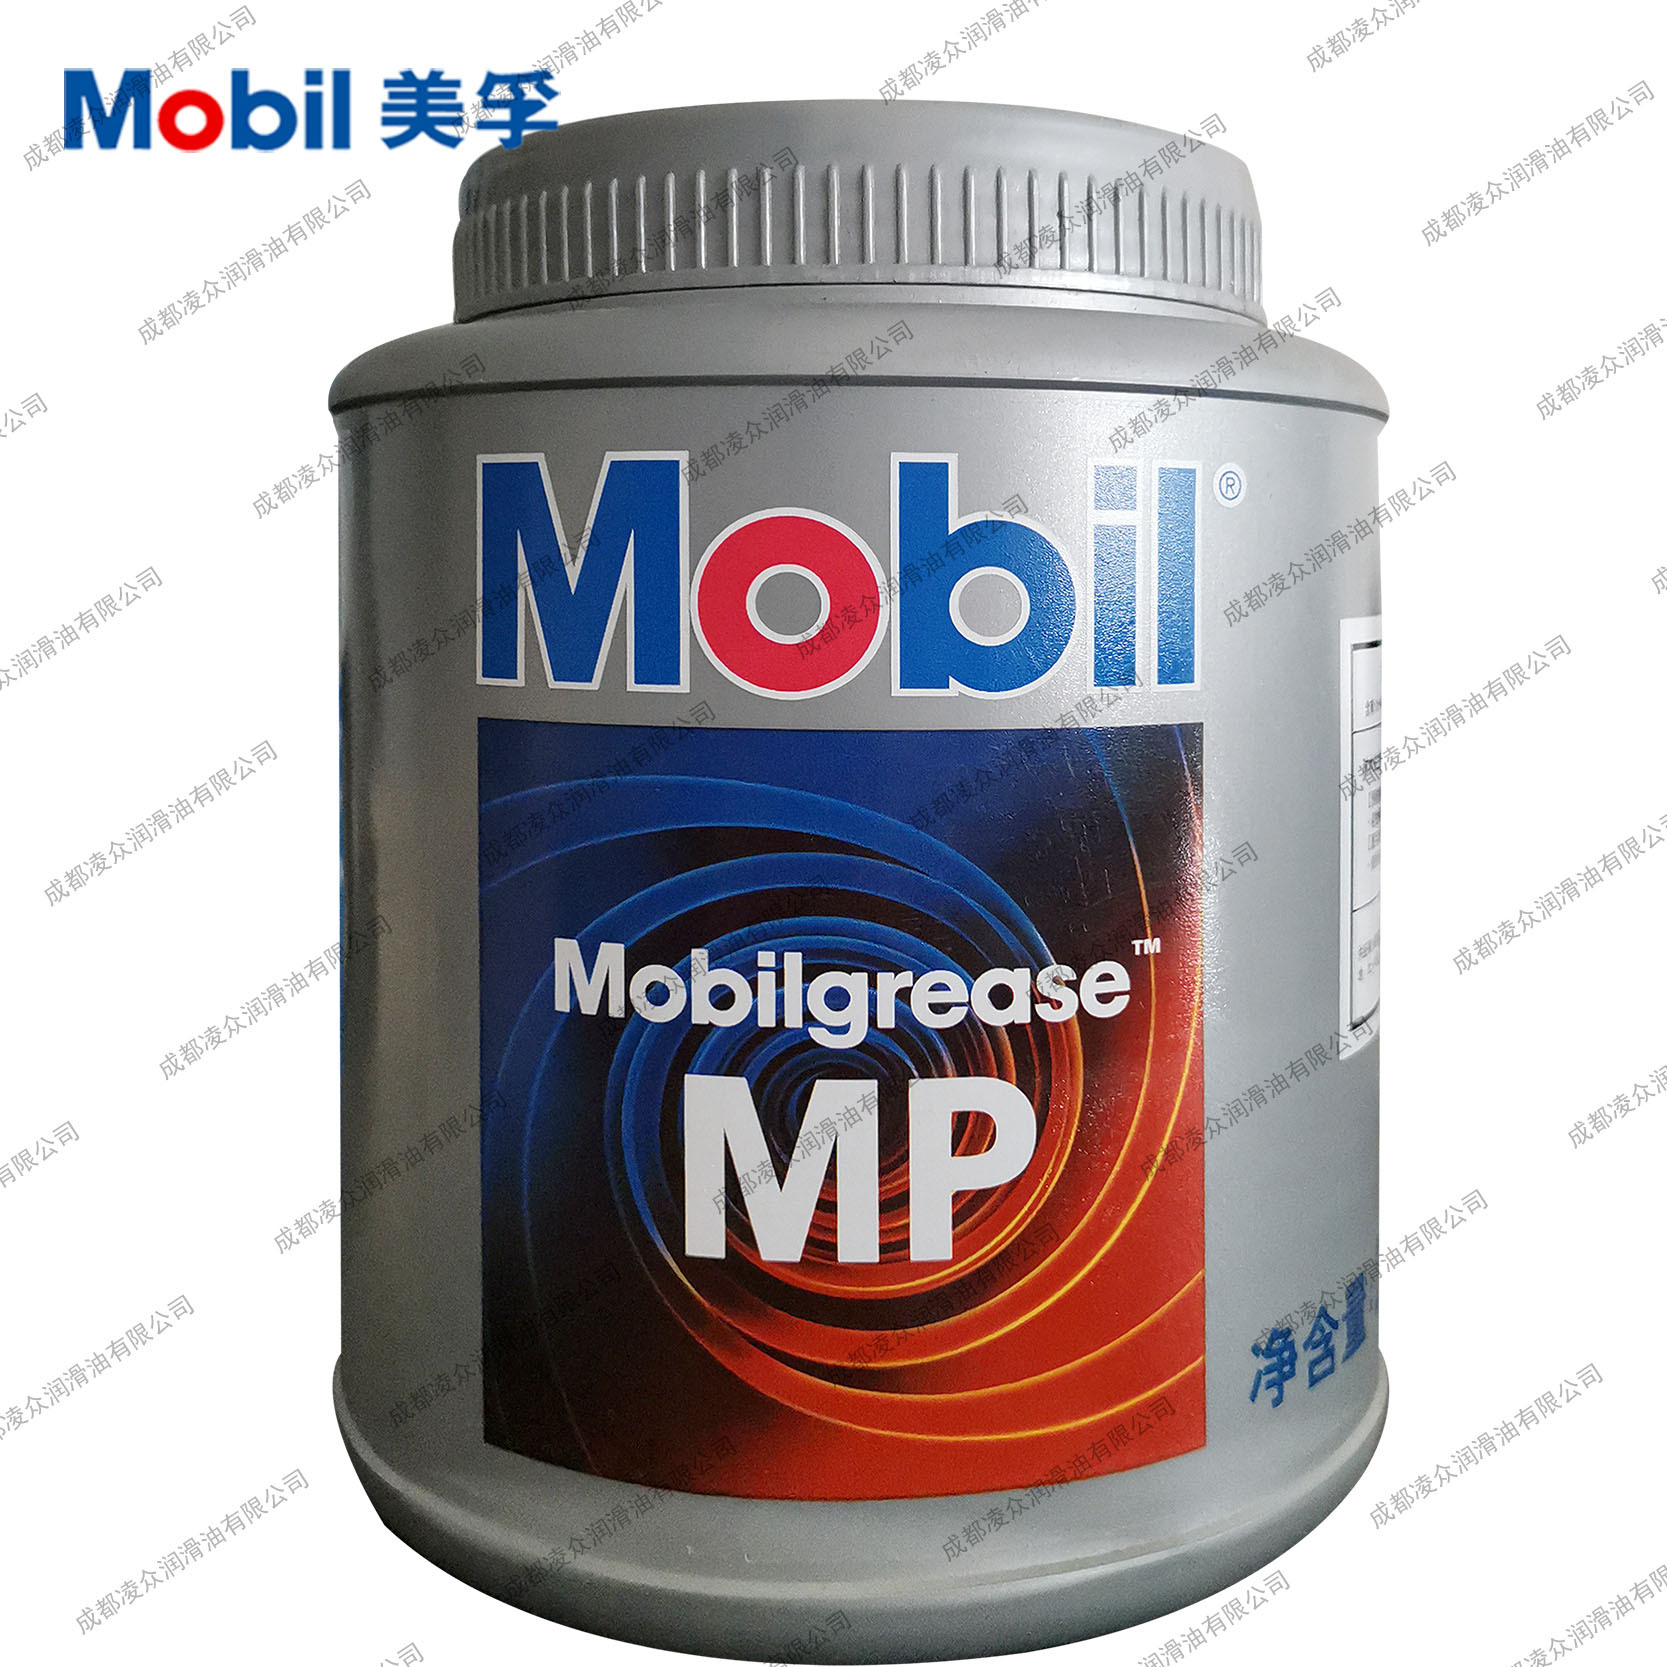 M|obilgrease 美|孚MP 2号抗水耐磨轴承润滑脂 中棕色 耐高温黄油